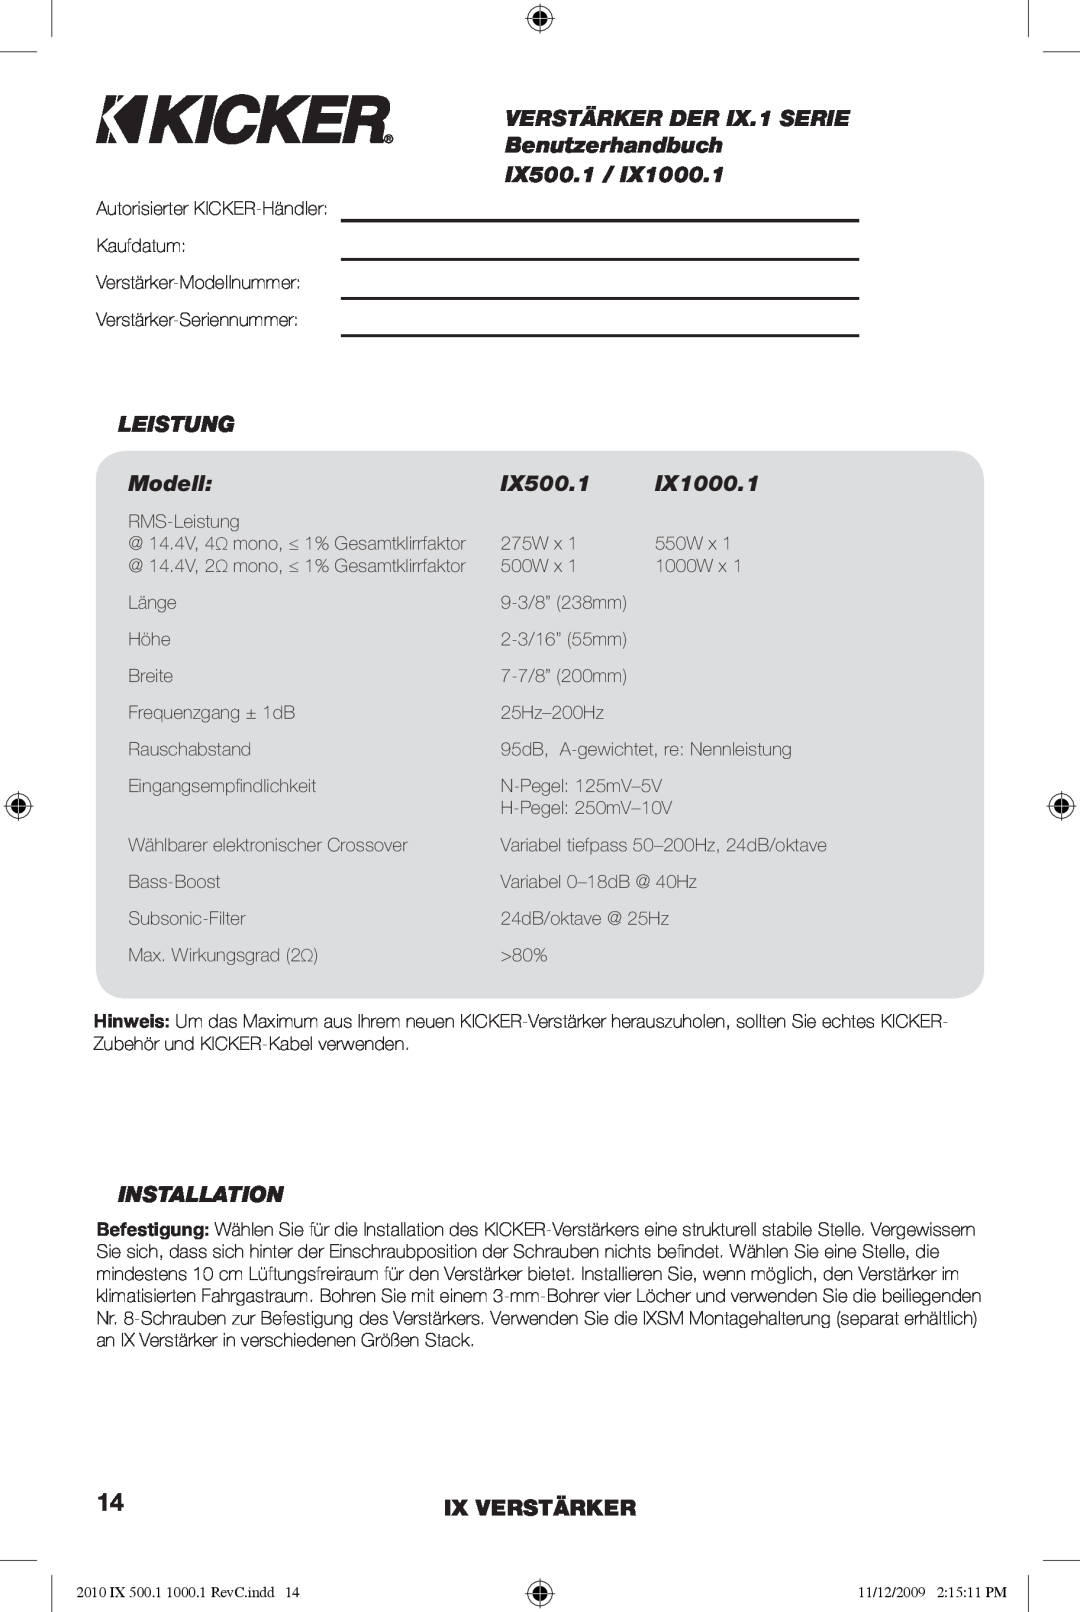 Kicker IX1000.1 manual VERSTÄRKER DER IX.1 SERIE Benutzerhandbuch, Leistung, Modell, Ix Verstärker, IX500.1, Installation 